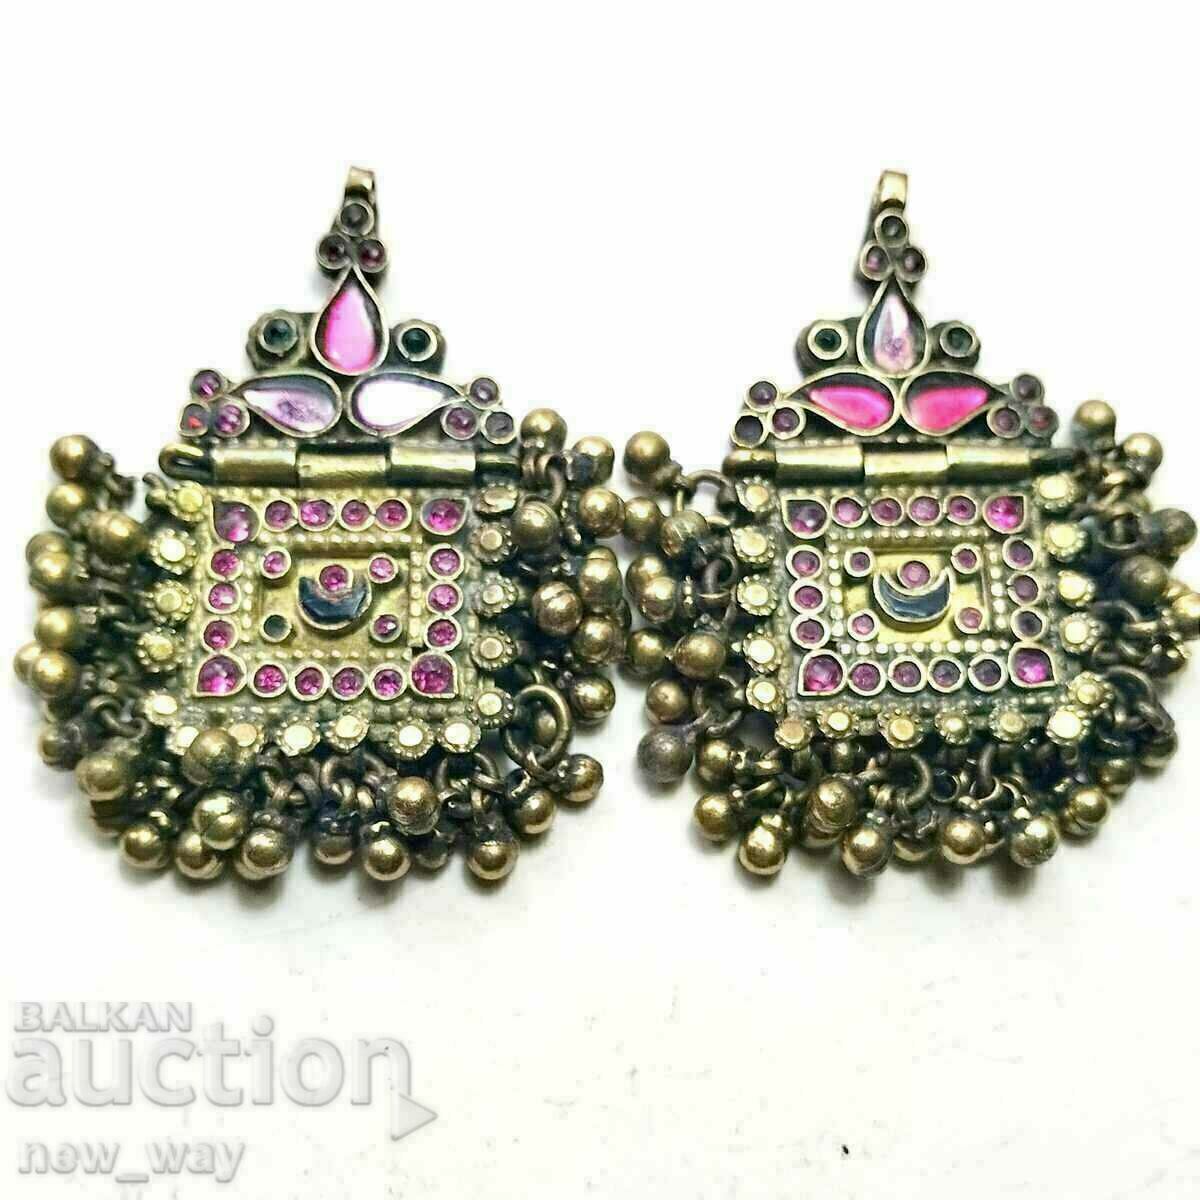 A pair of old Ottoman Renaissance earrings. Jewelry. Flicker.